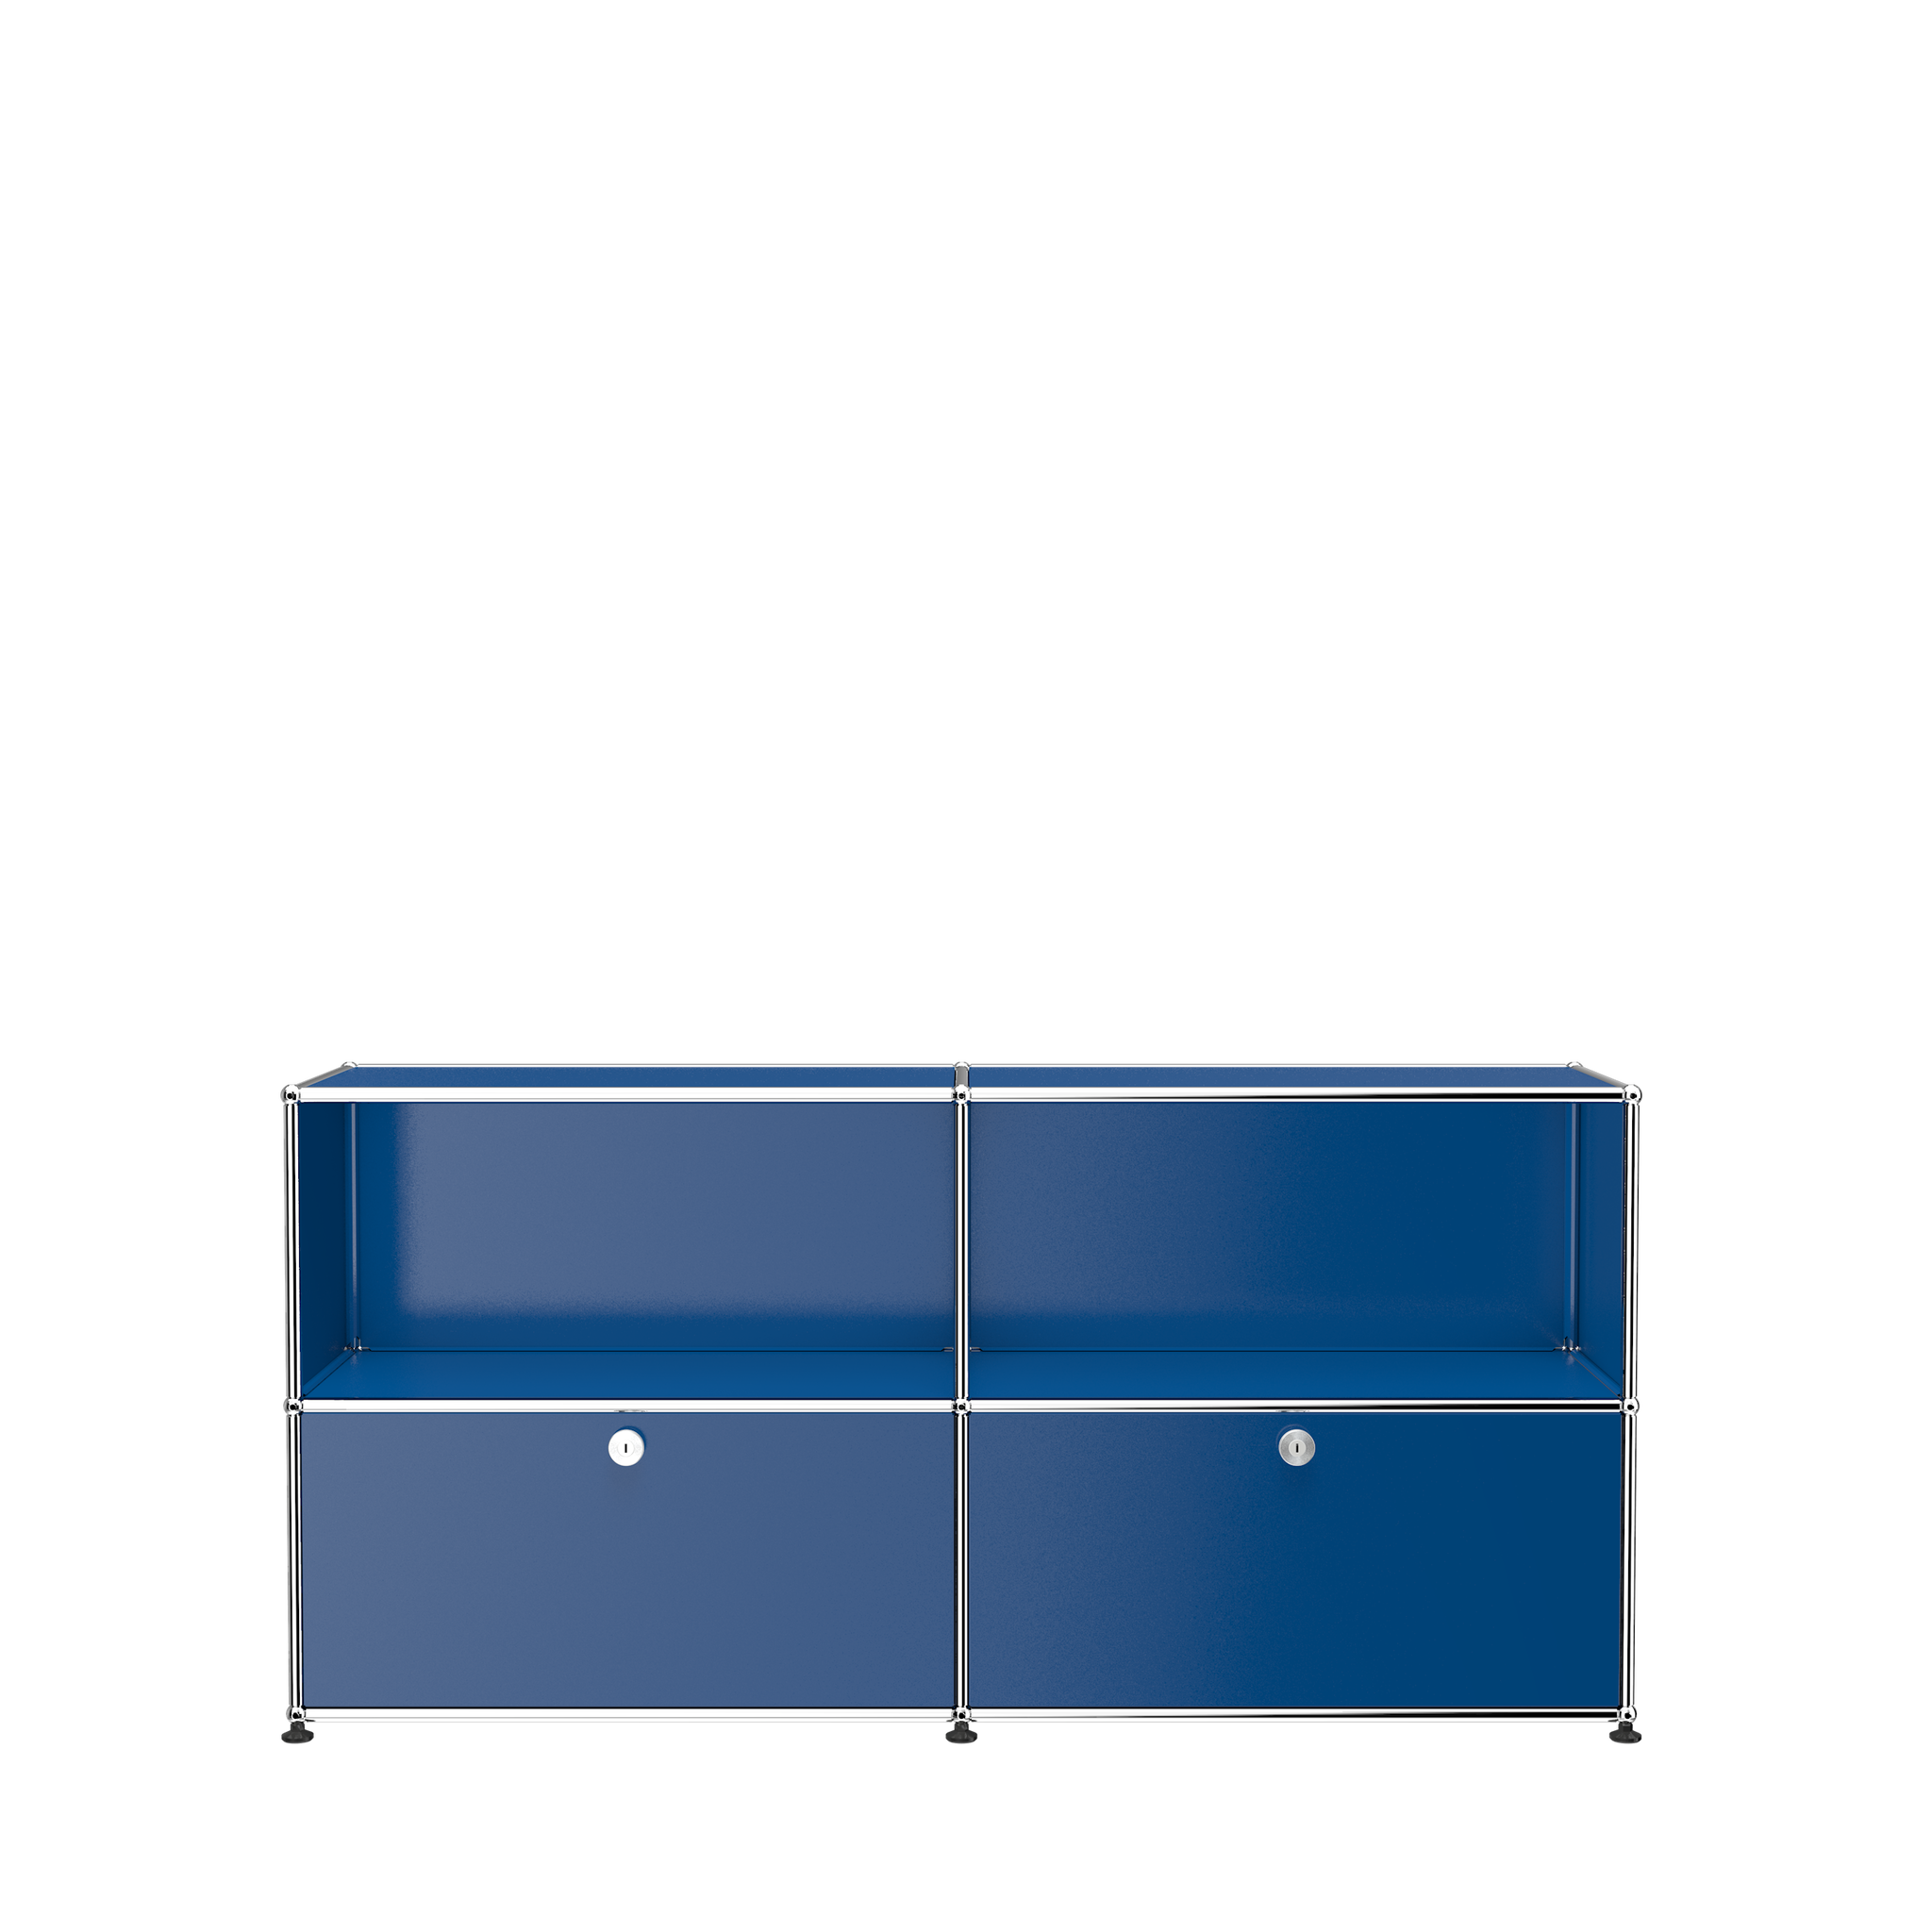 USM Haller Steel 2 Door Credenza File Cabinet (C2A) in Gentian Blue